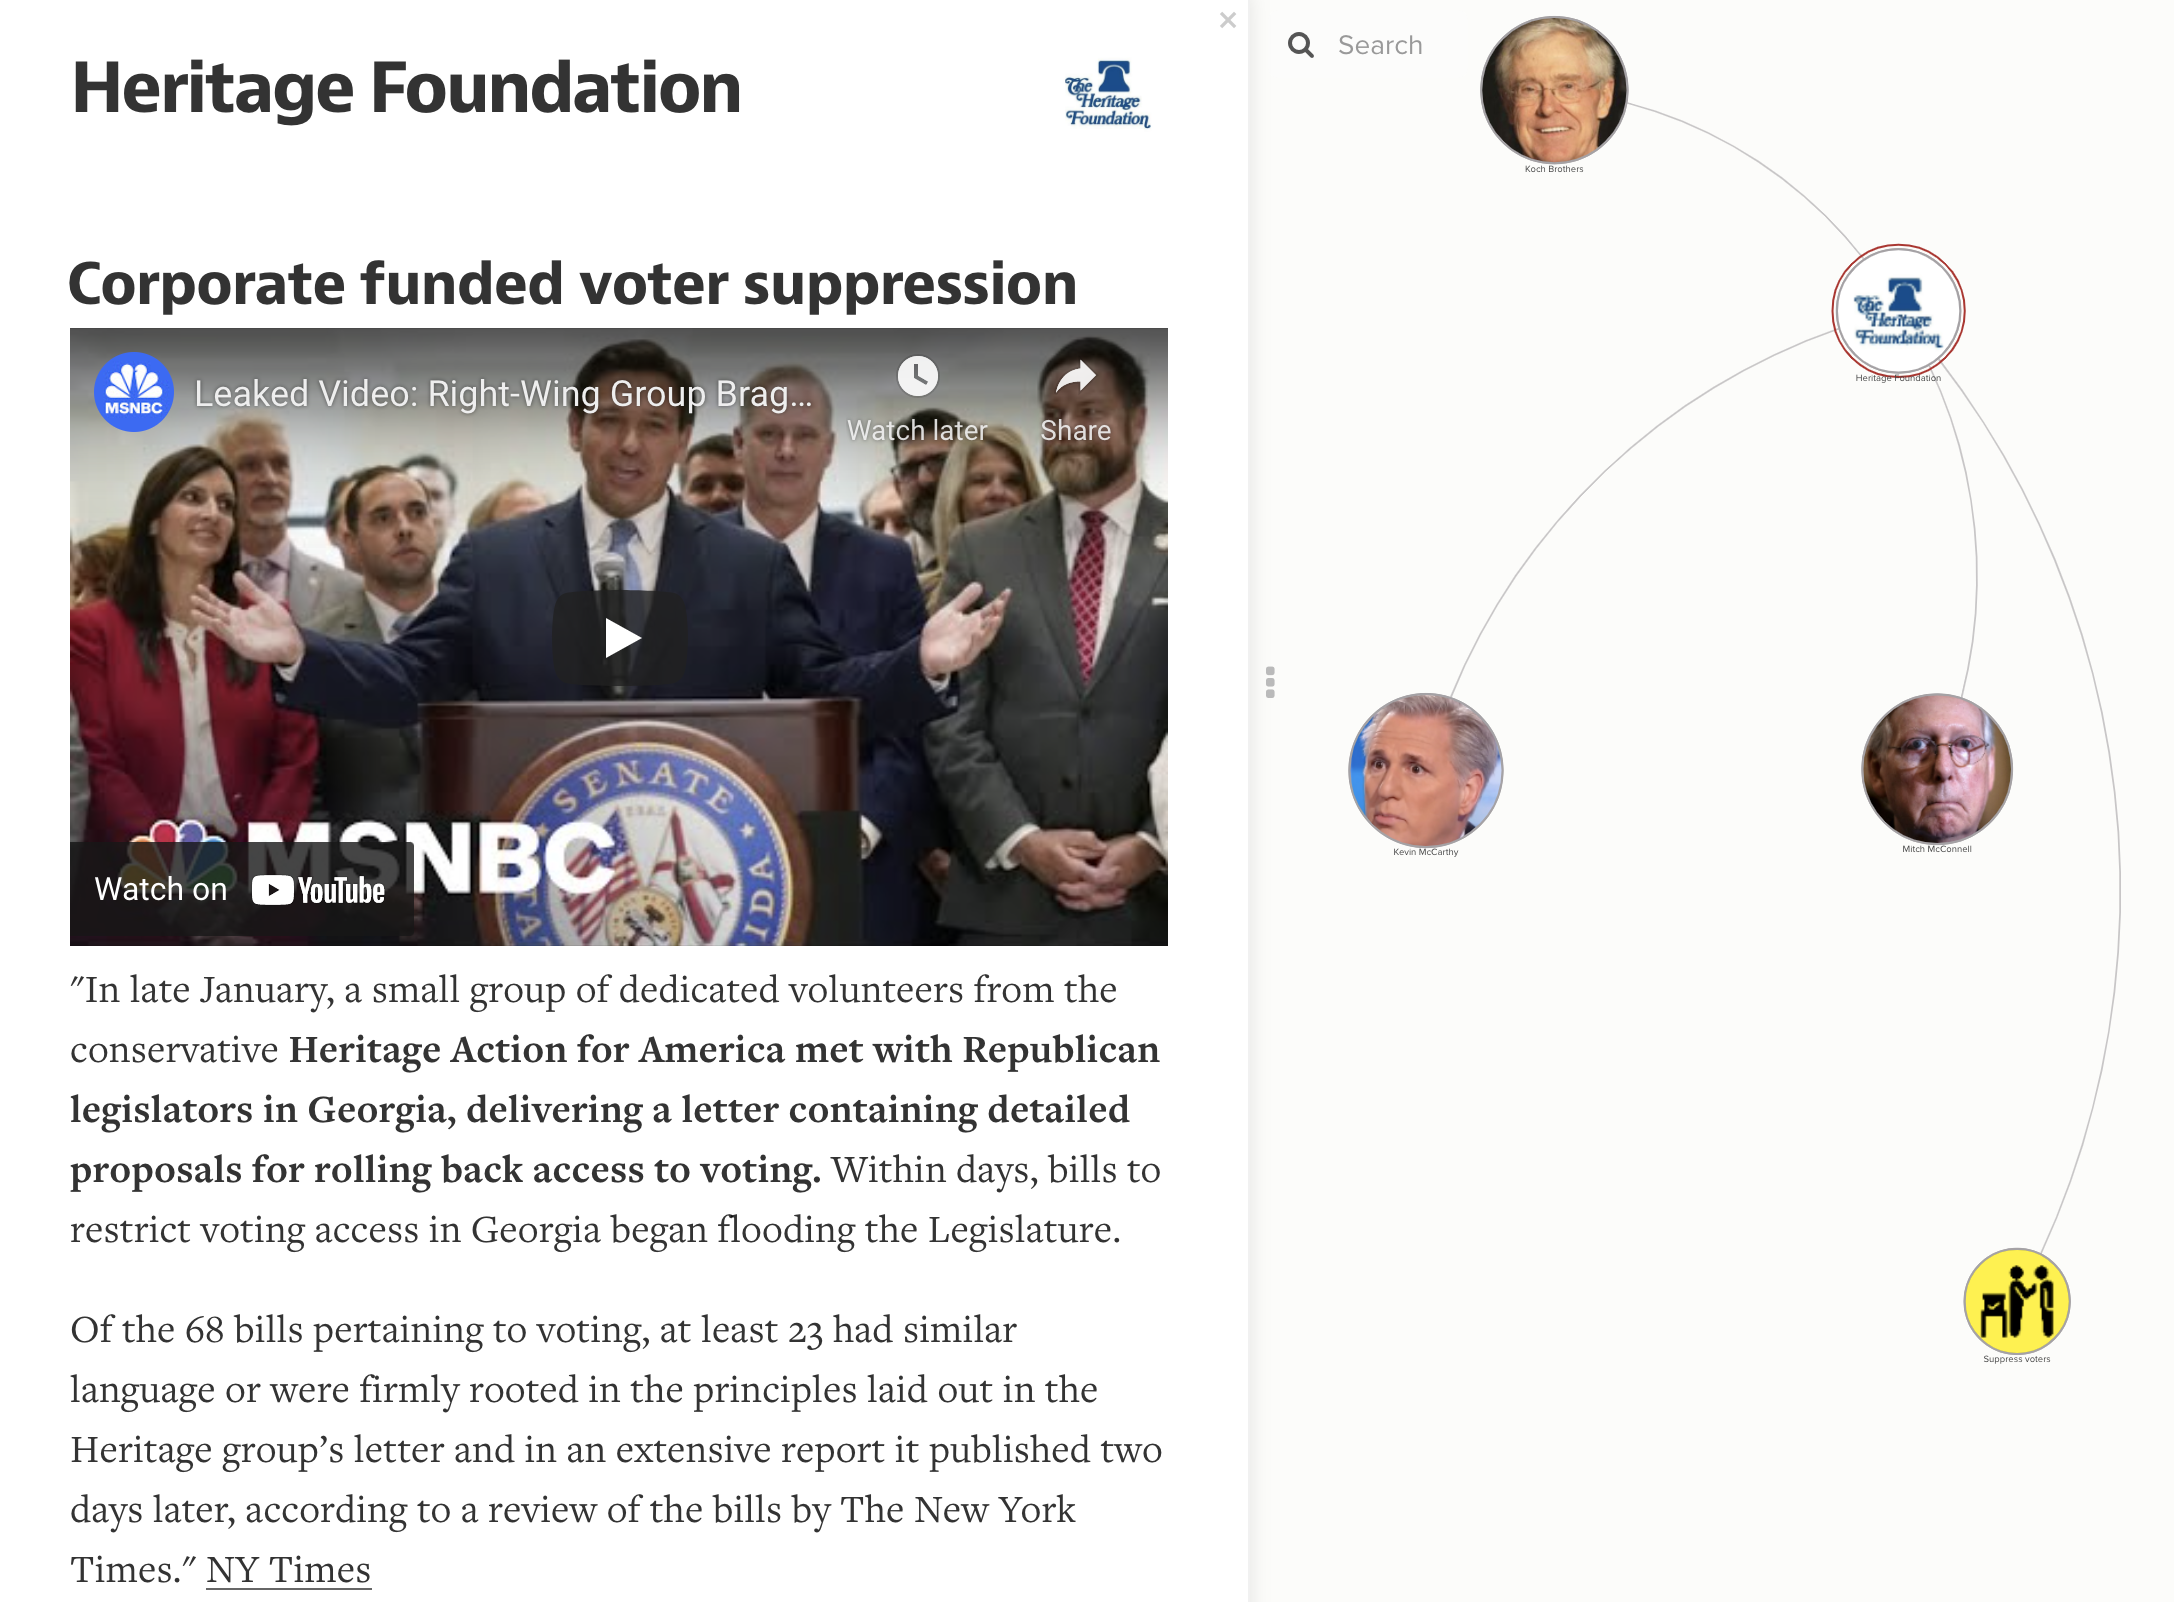 Koch Brothers funded Heritage Foundation drafts voter suppression bills for Republican legislatures.